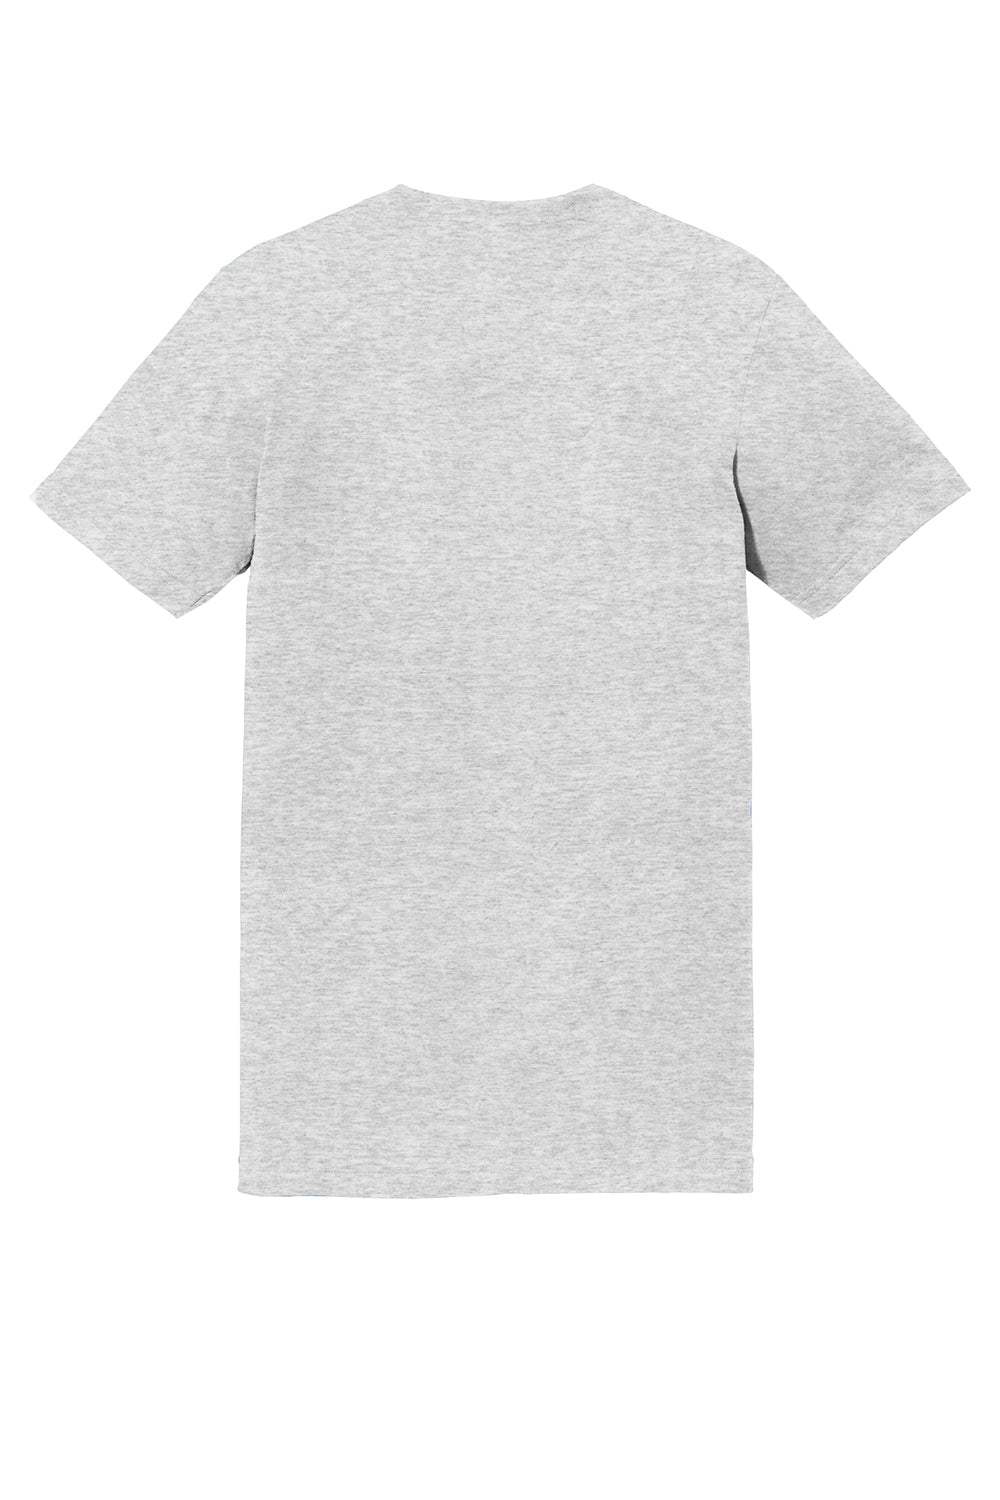 American Apparel 2001 Mens Fine Jersey Short Sleeve Crewneck T-Shirt Ash Grey Flat Back